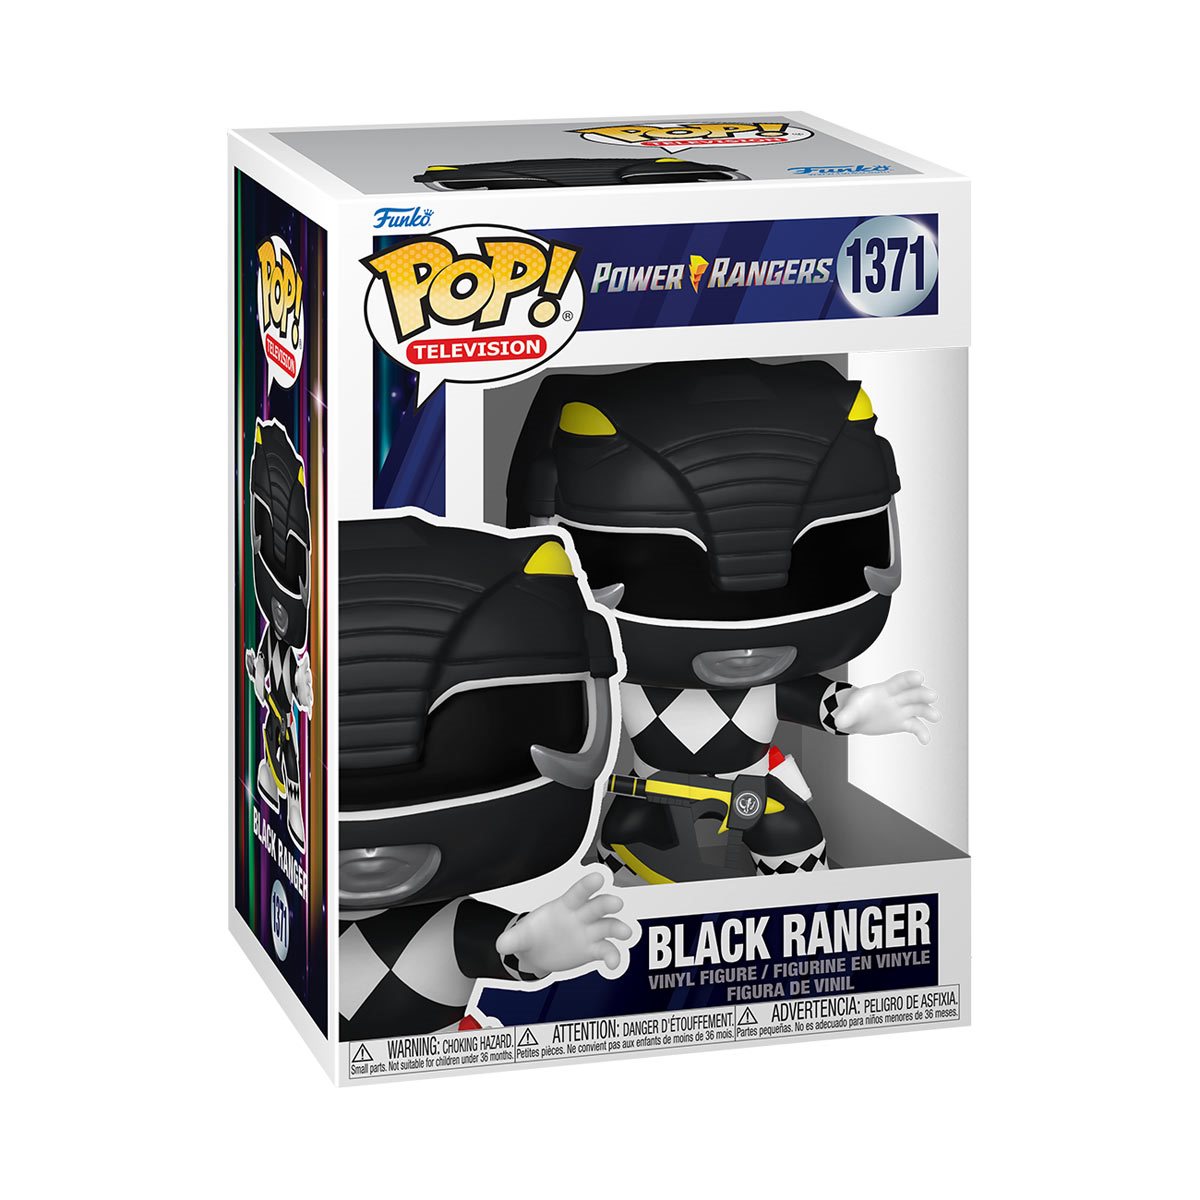 Funko Pop! Mighty Morphin Power Rangers 30th Anniversary Black Ranger Vinyl Figure #1371 with protector box